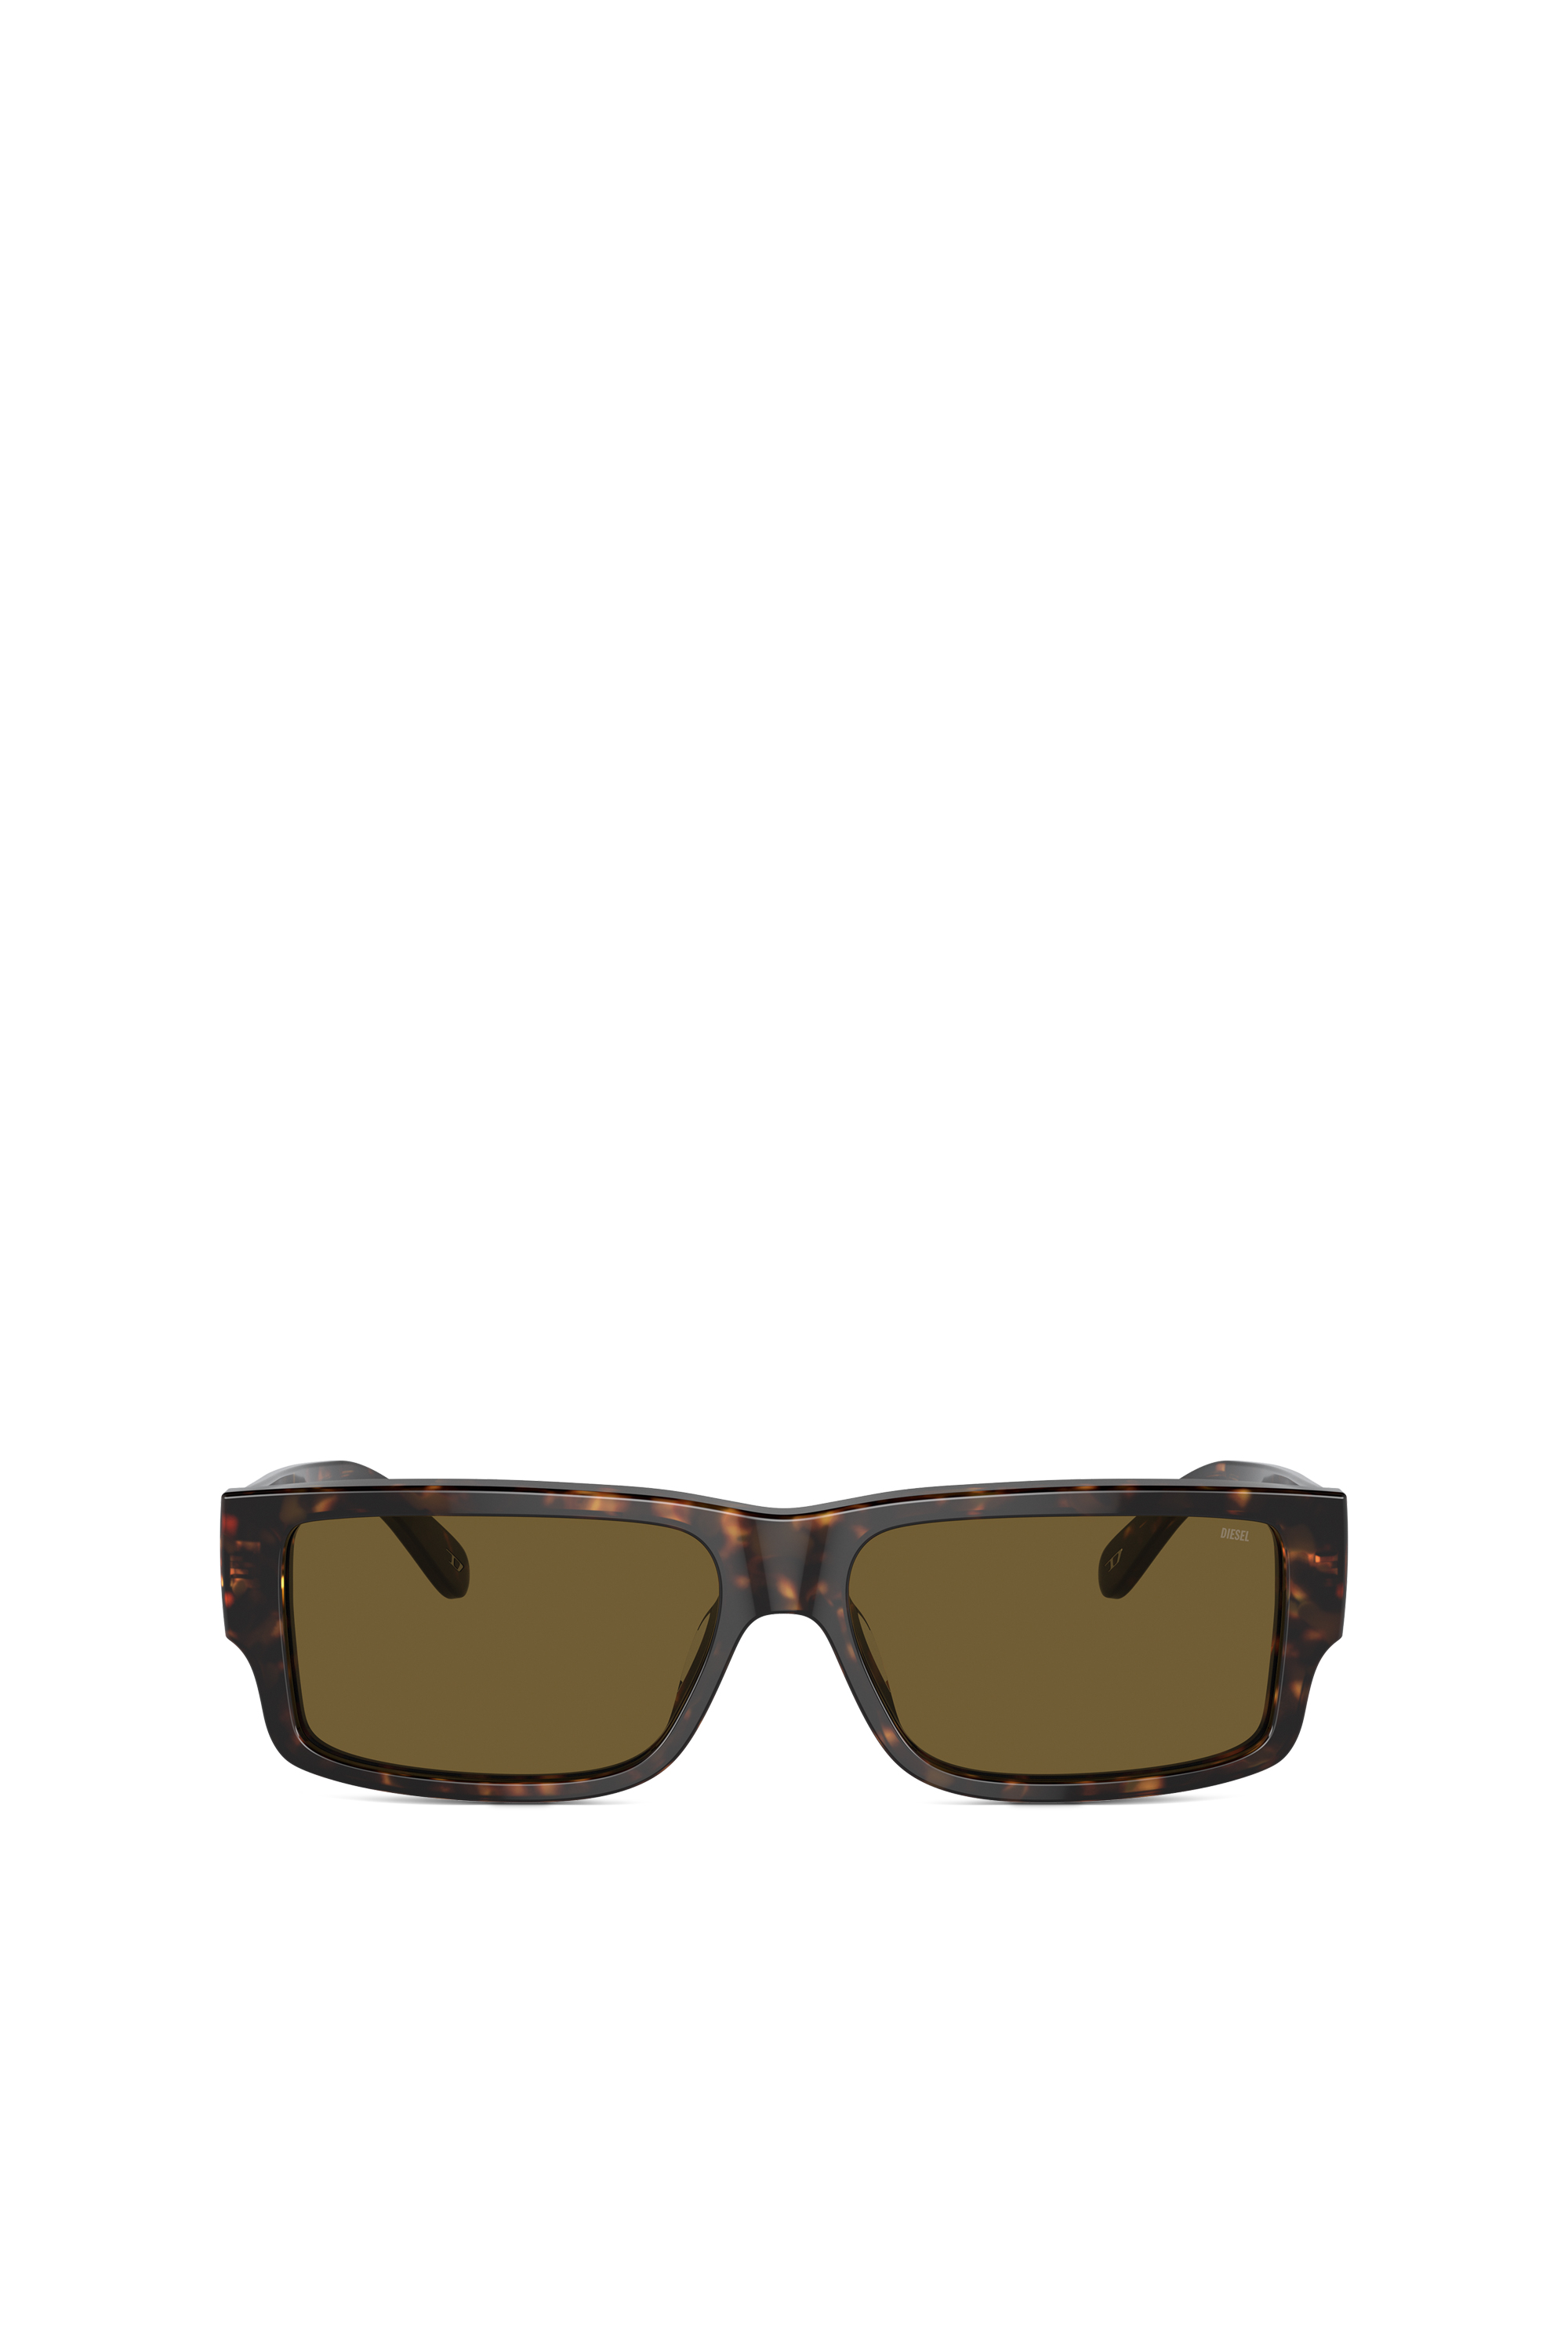 Diesel Rectangle Sunglasses In Marrone